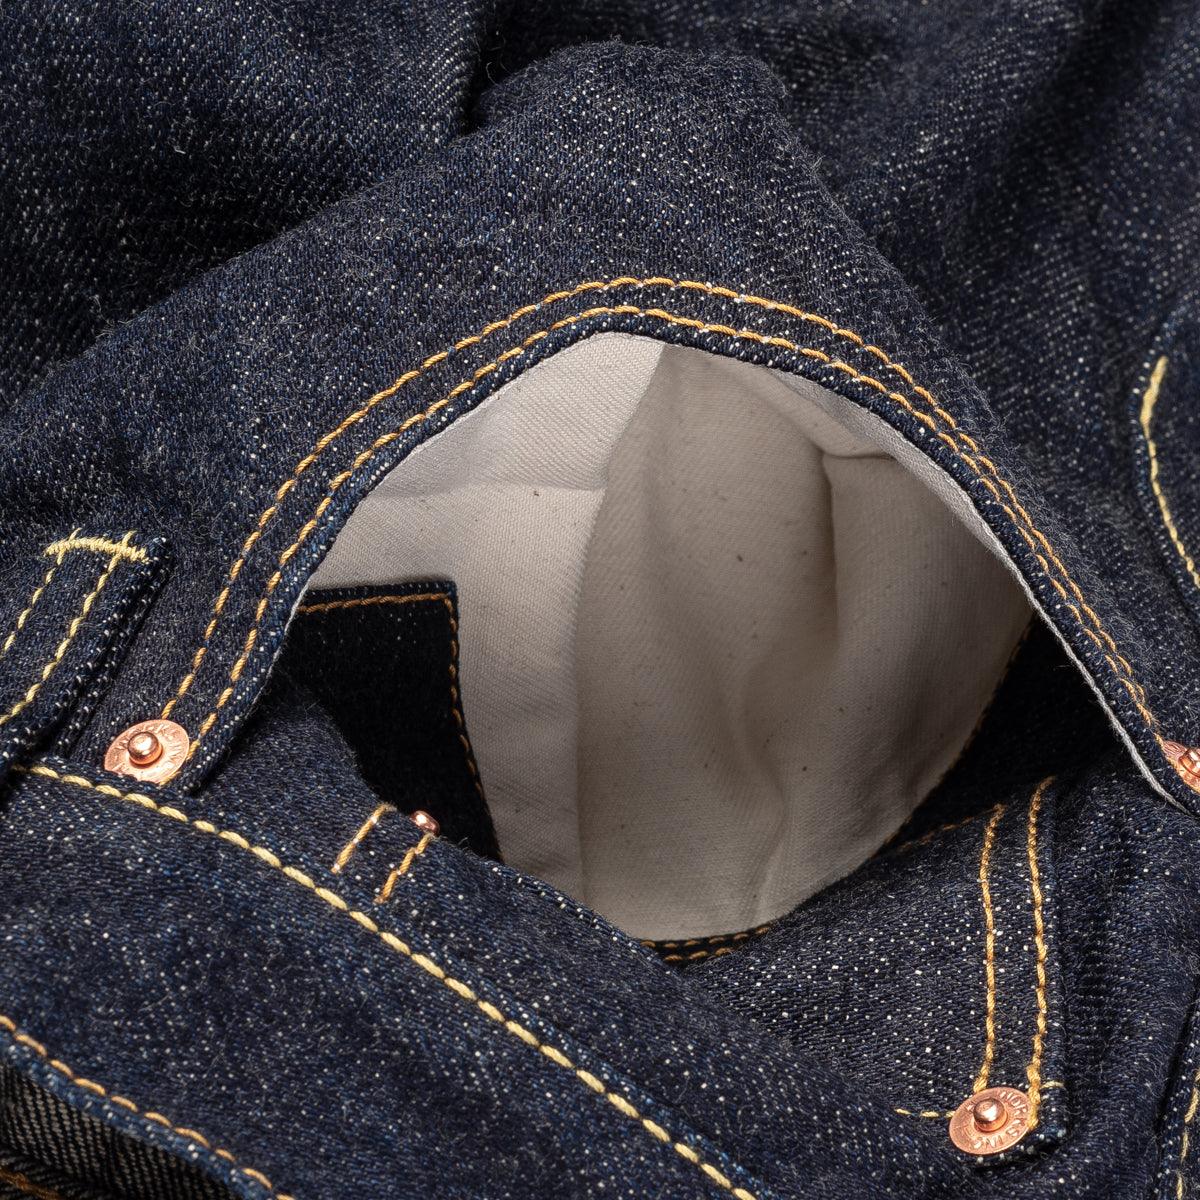 IH-555S-18 - 18oz Vintage Selvedge Denim Slim Cut Jeans Indigo